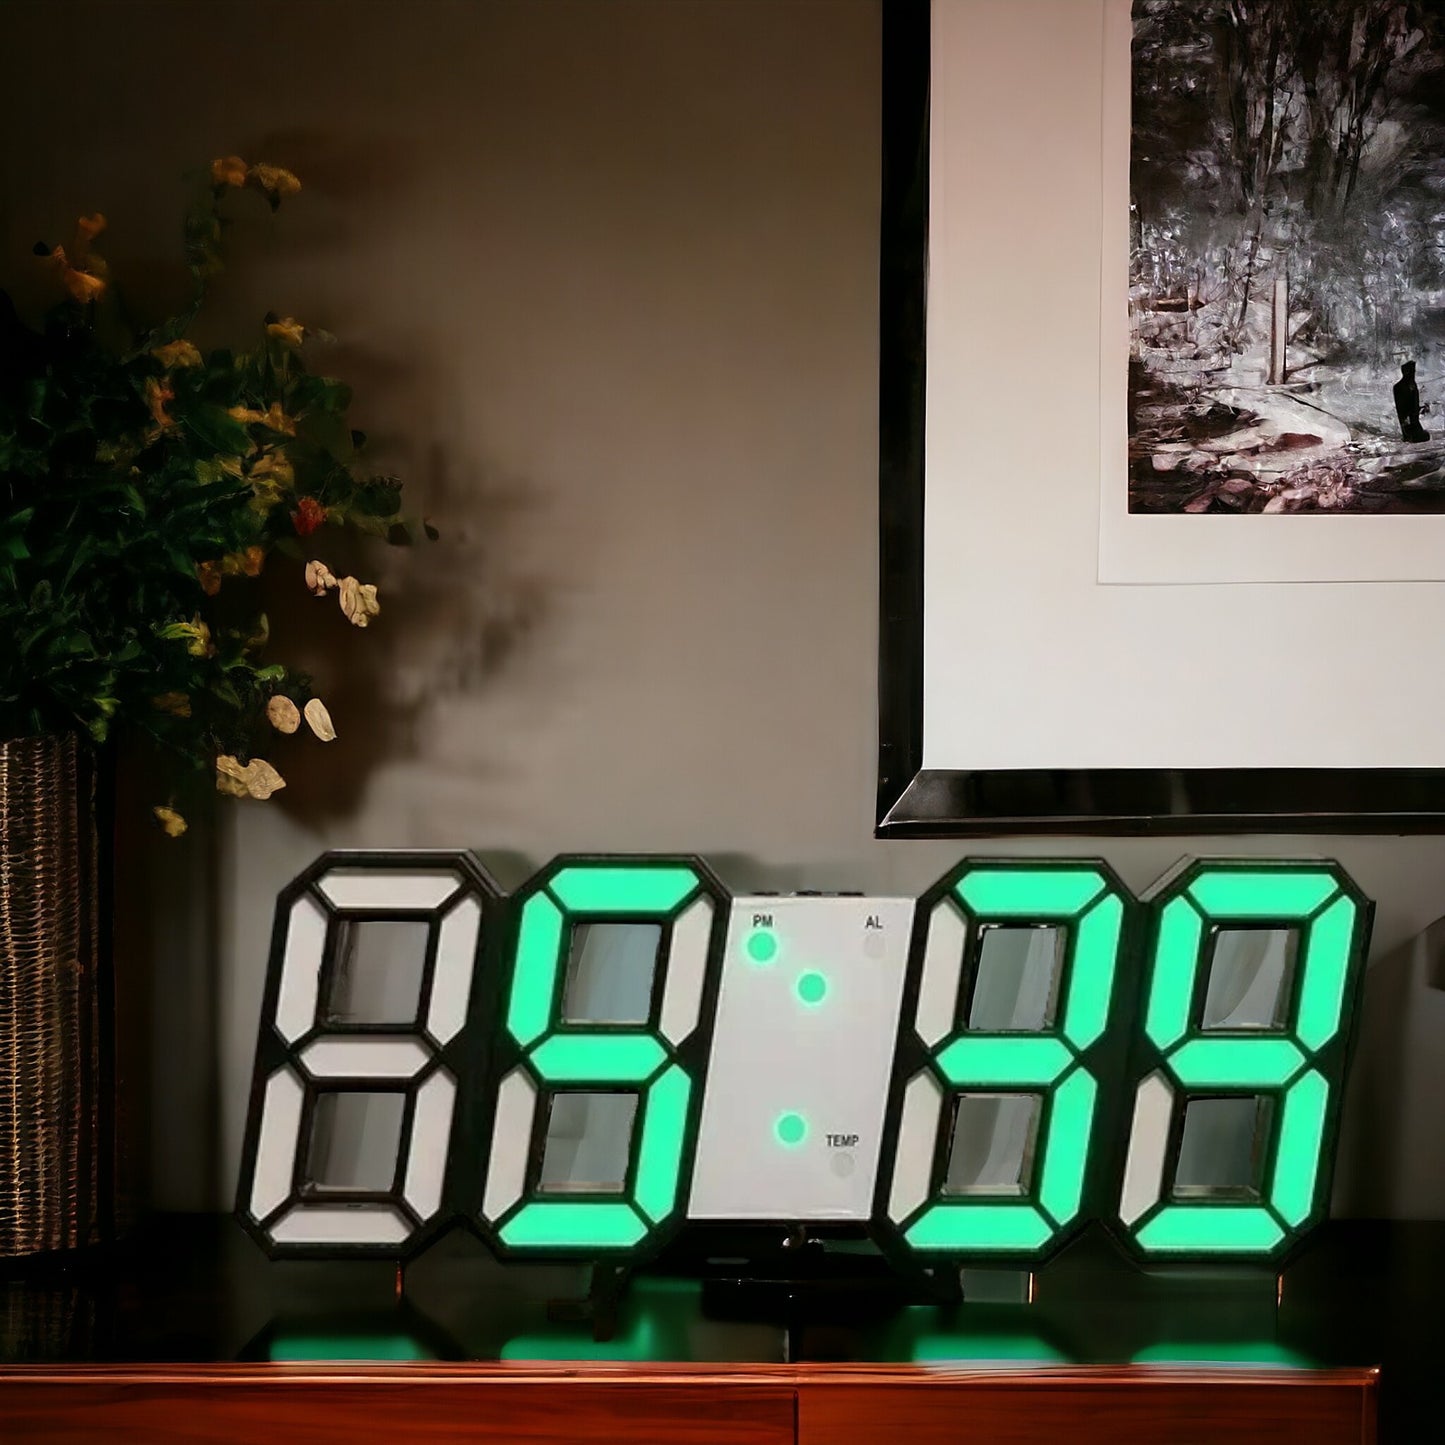 Digital LED Clock